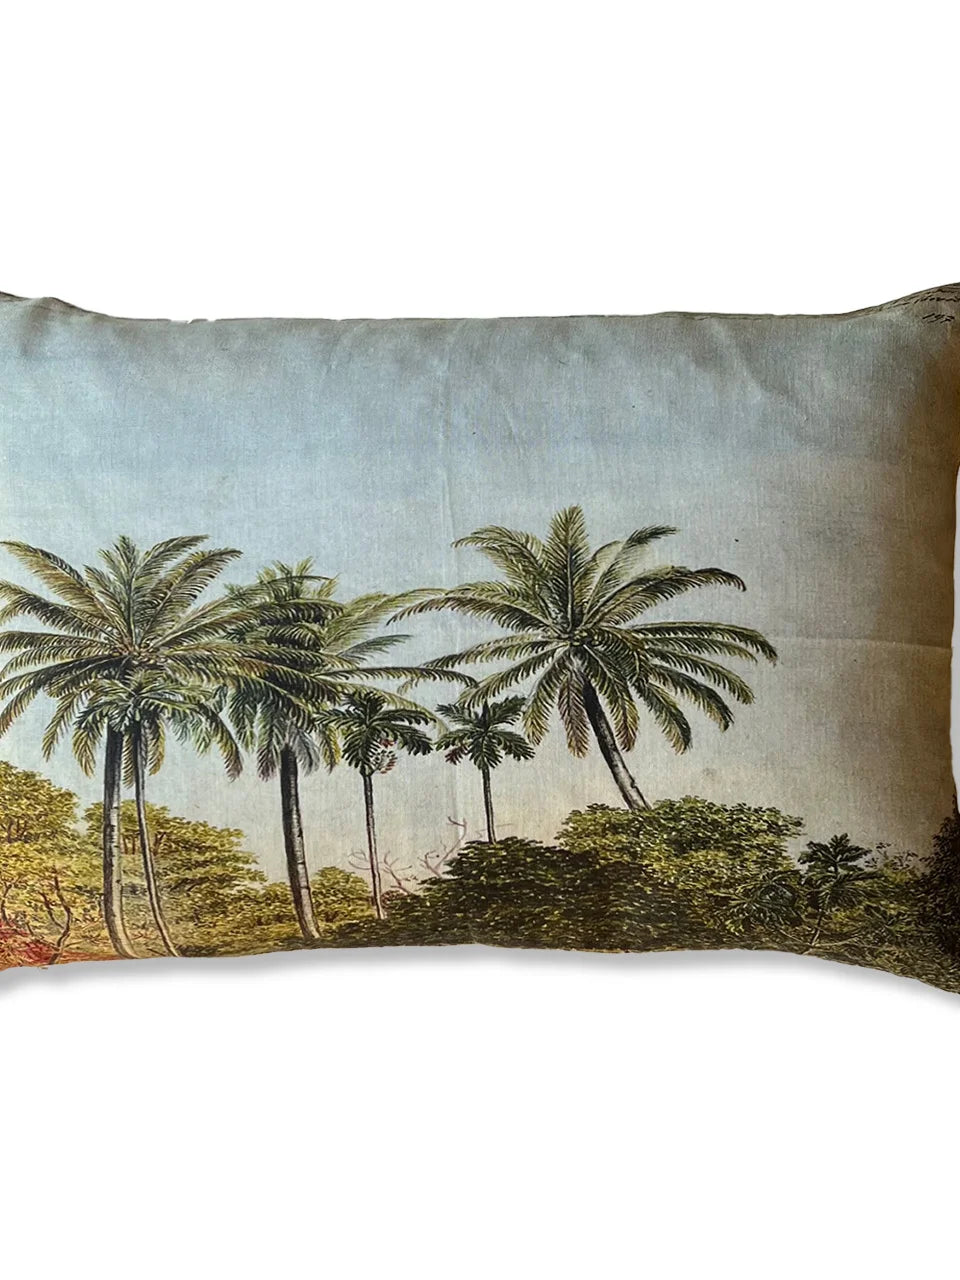 The Palms Cushion